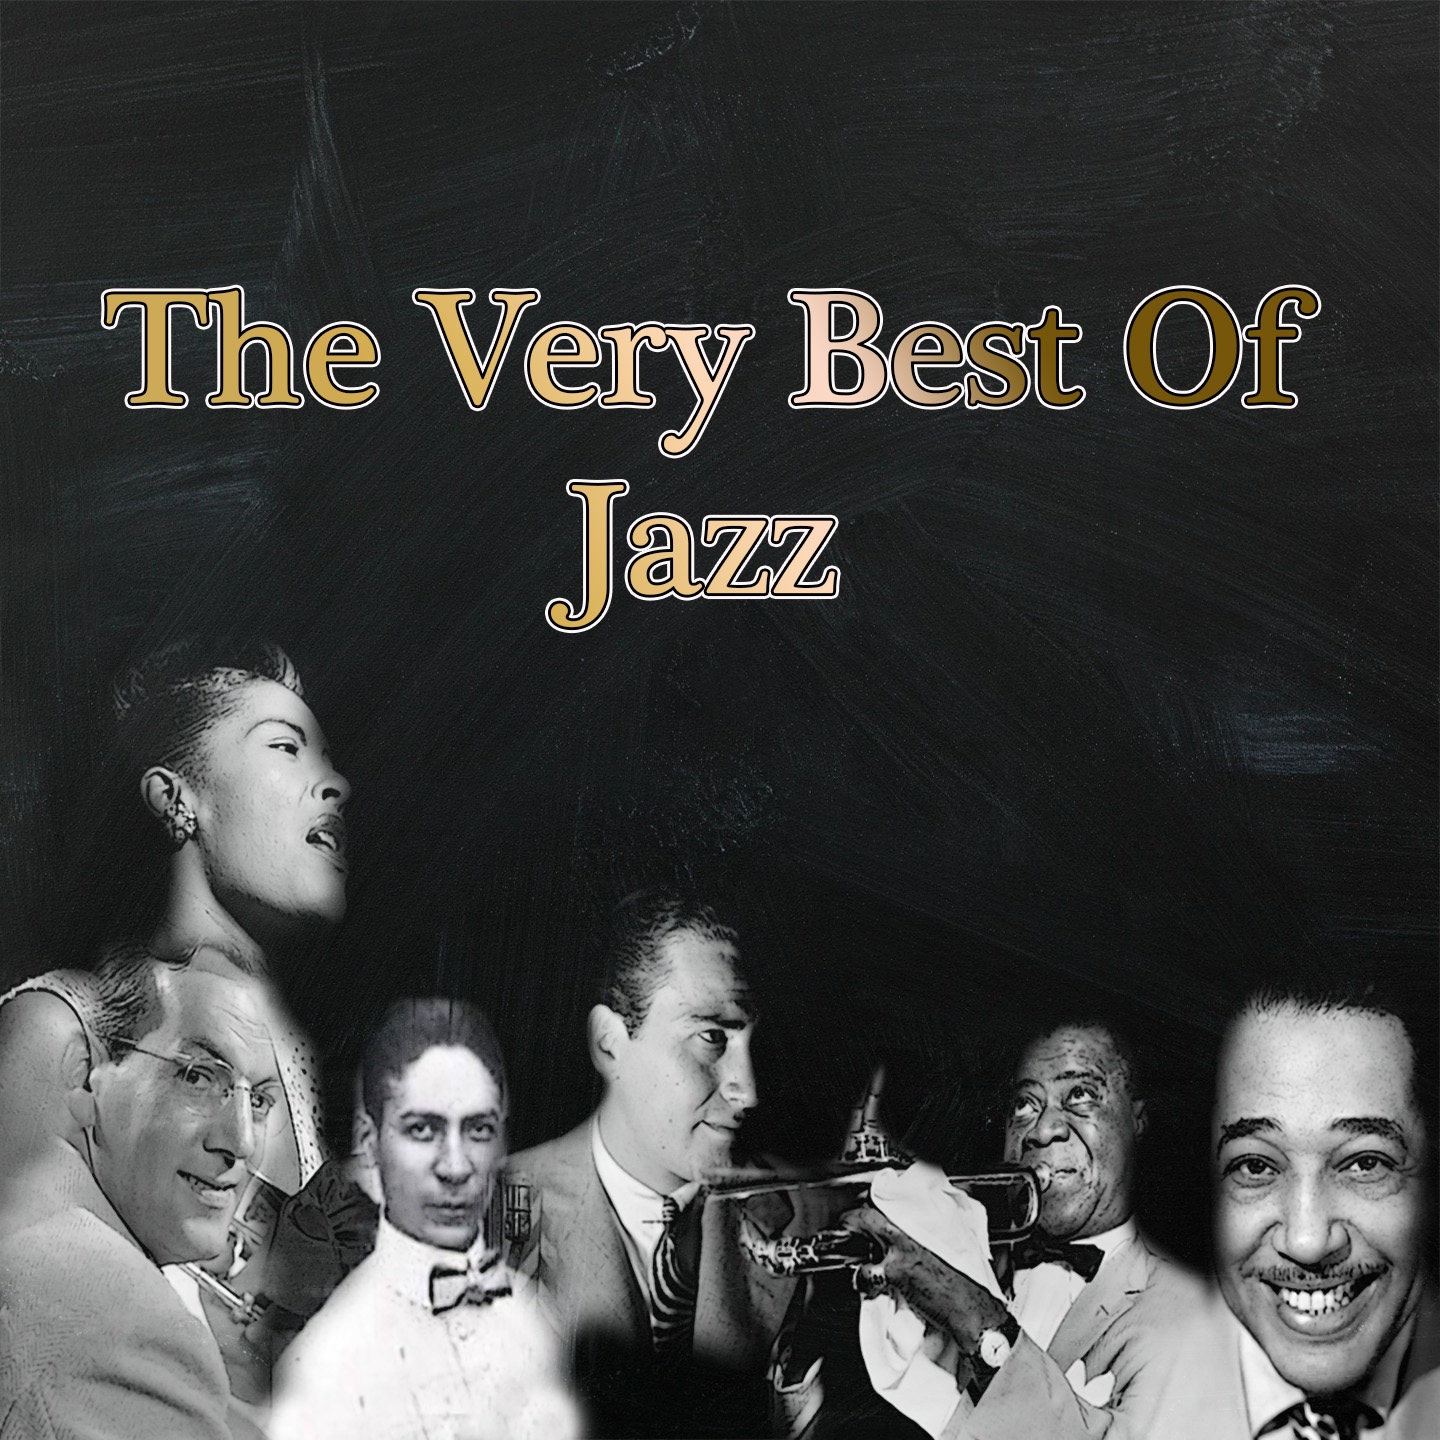 2- The Very Best of Jazz